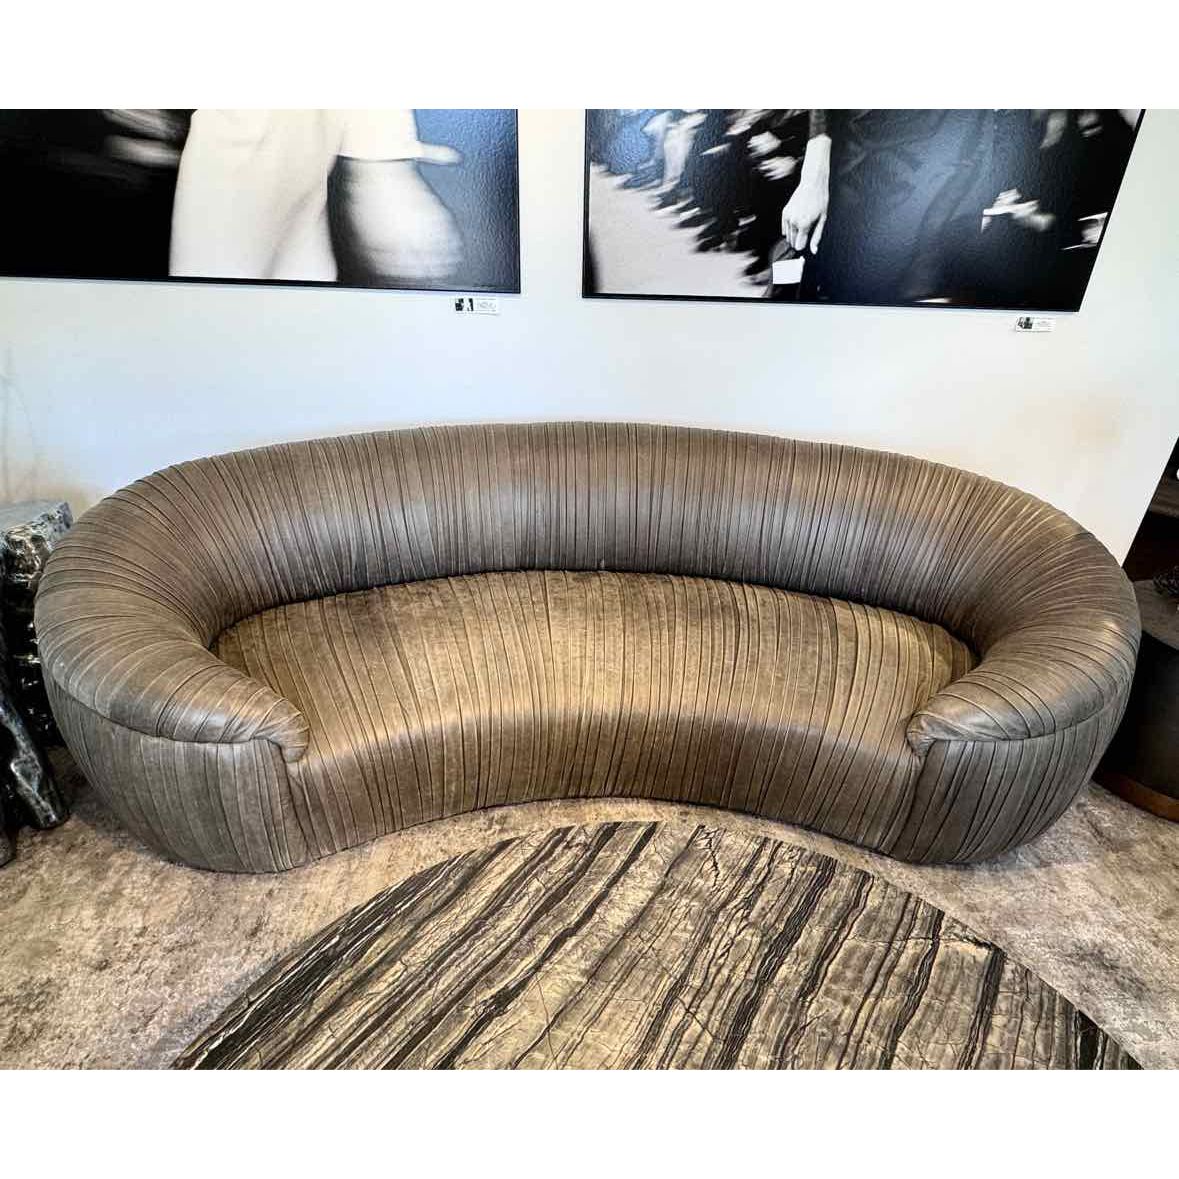 Custom Kelly Wearstler Curved Souffle Sofa - 96"L x 32"W x 24"H x 14"SH